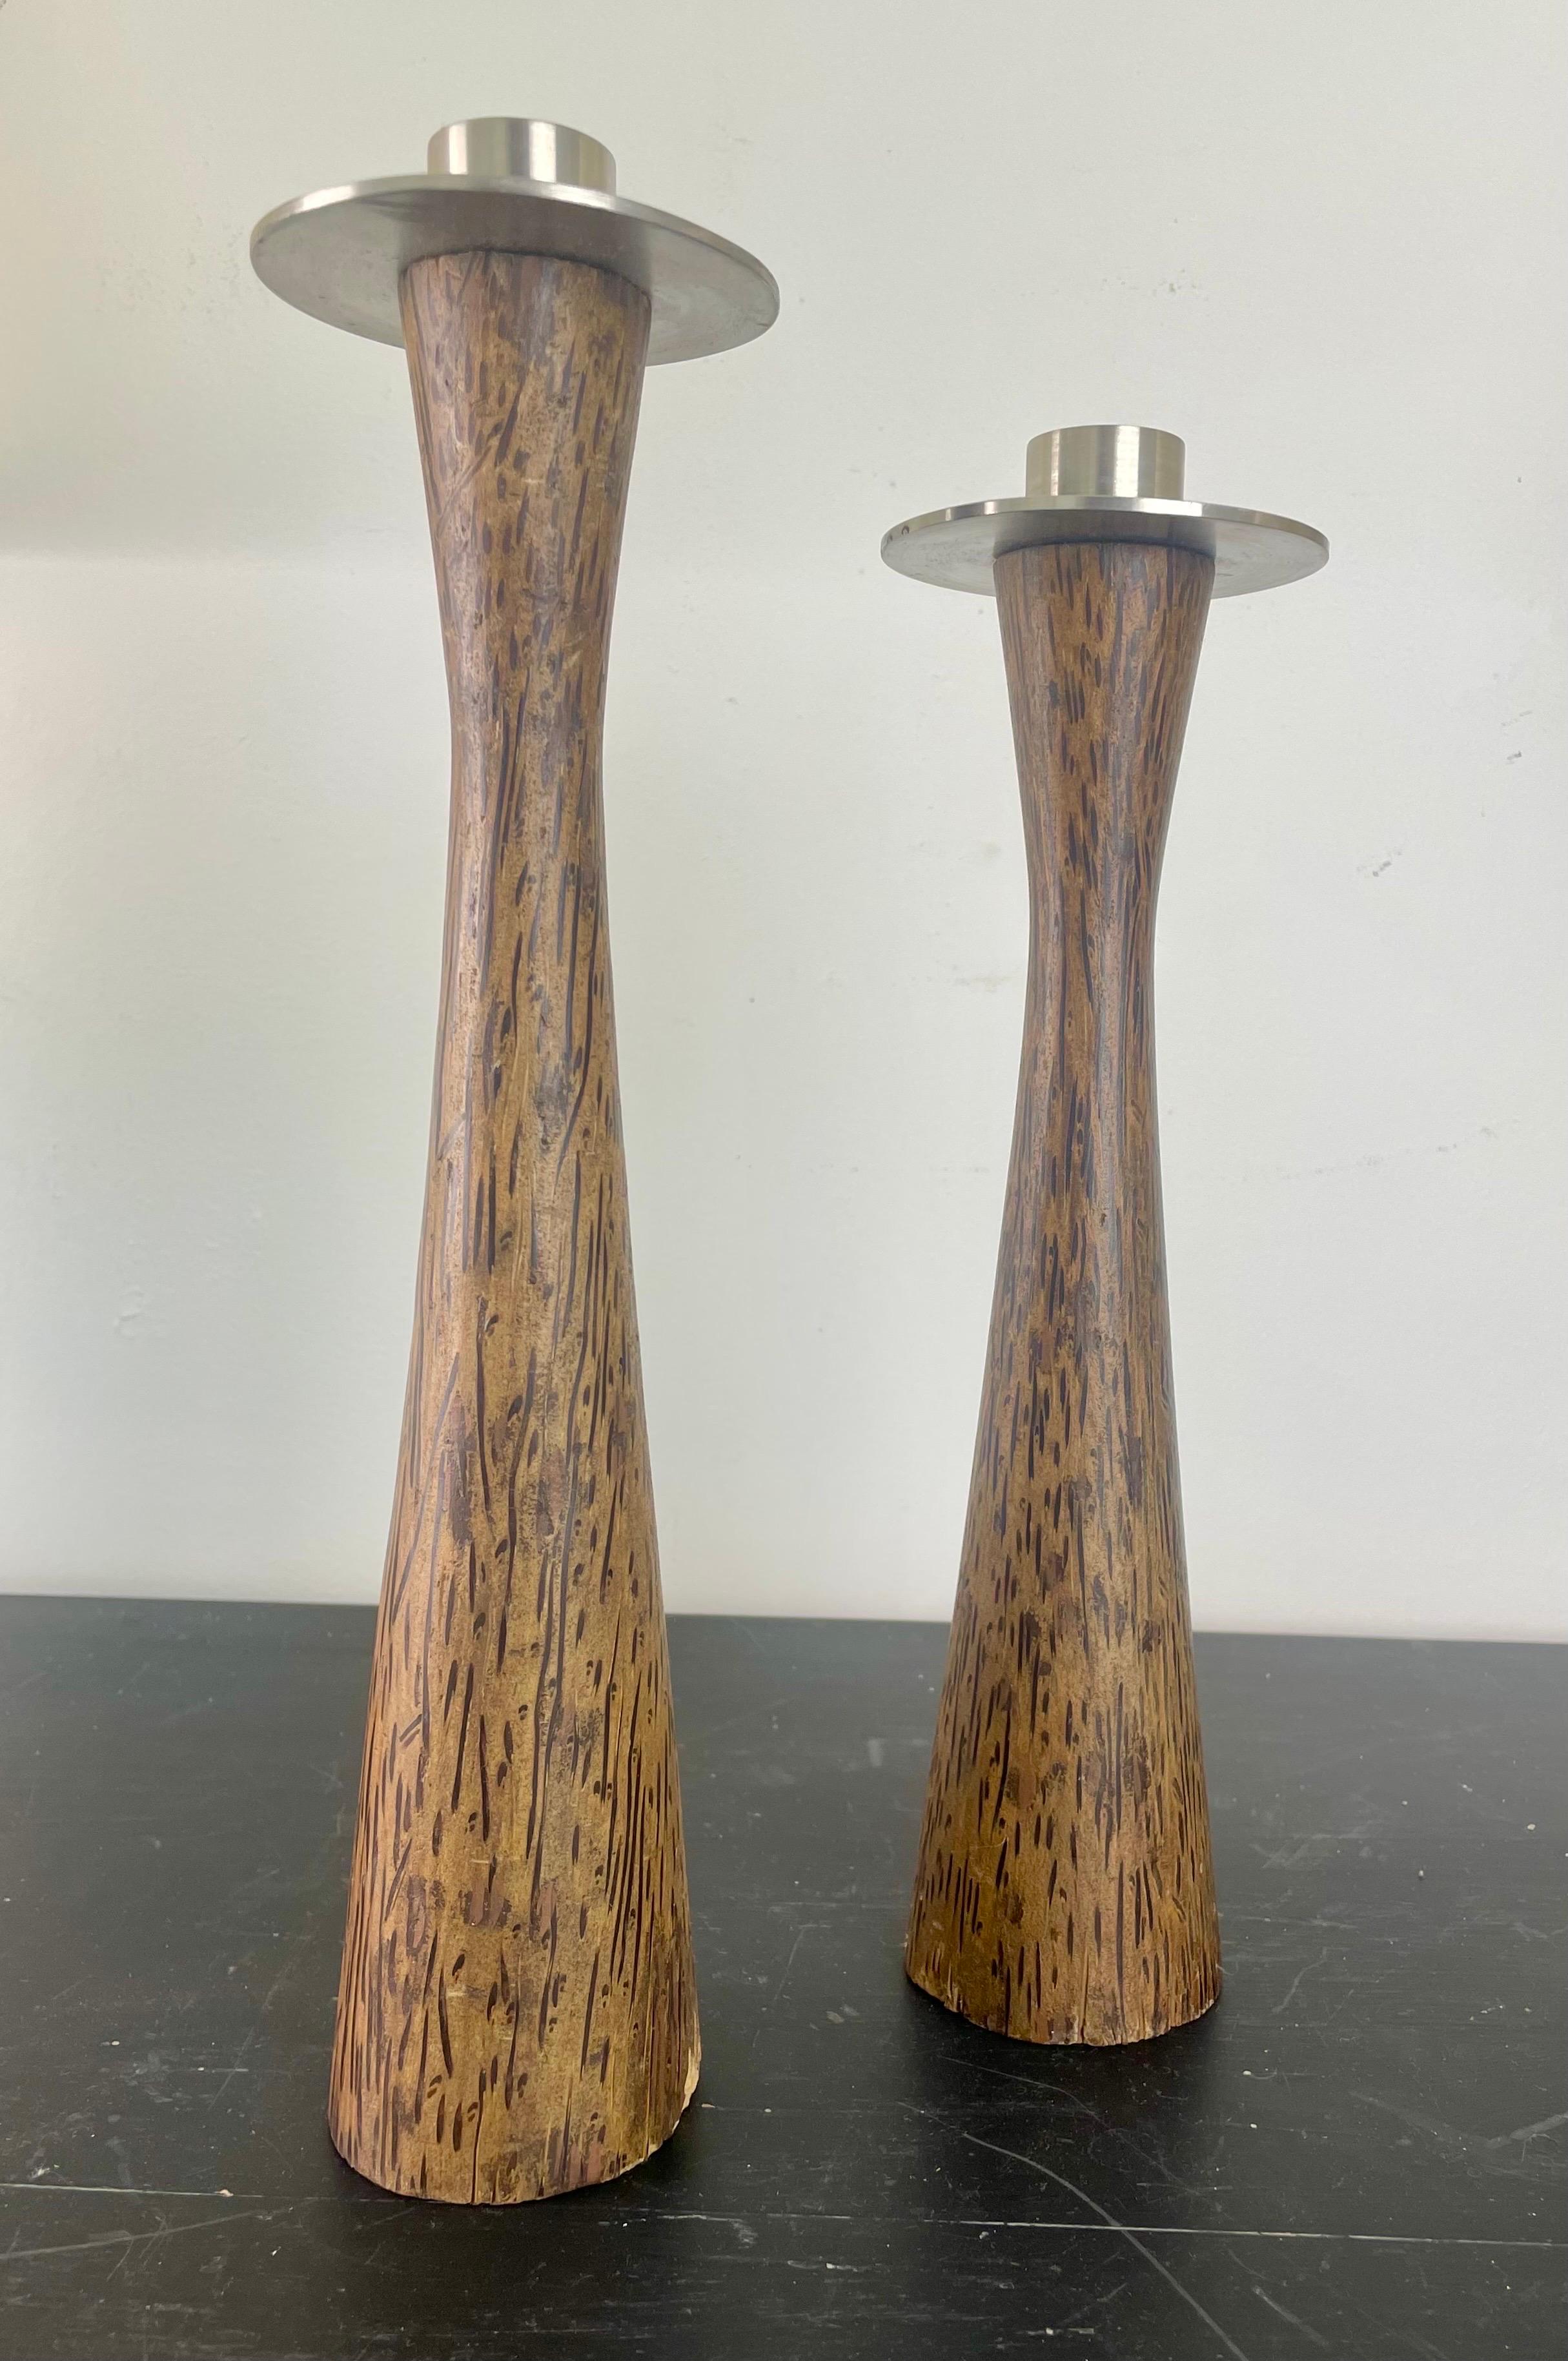 20th Century Scandinavian candlesticks in turned teak wood - Denmark or Sweden For Sale